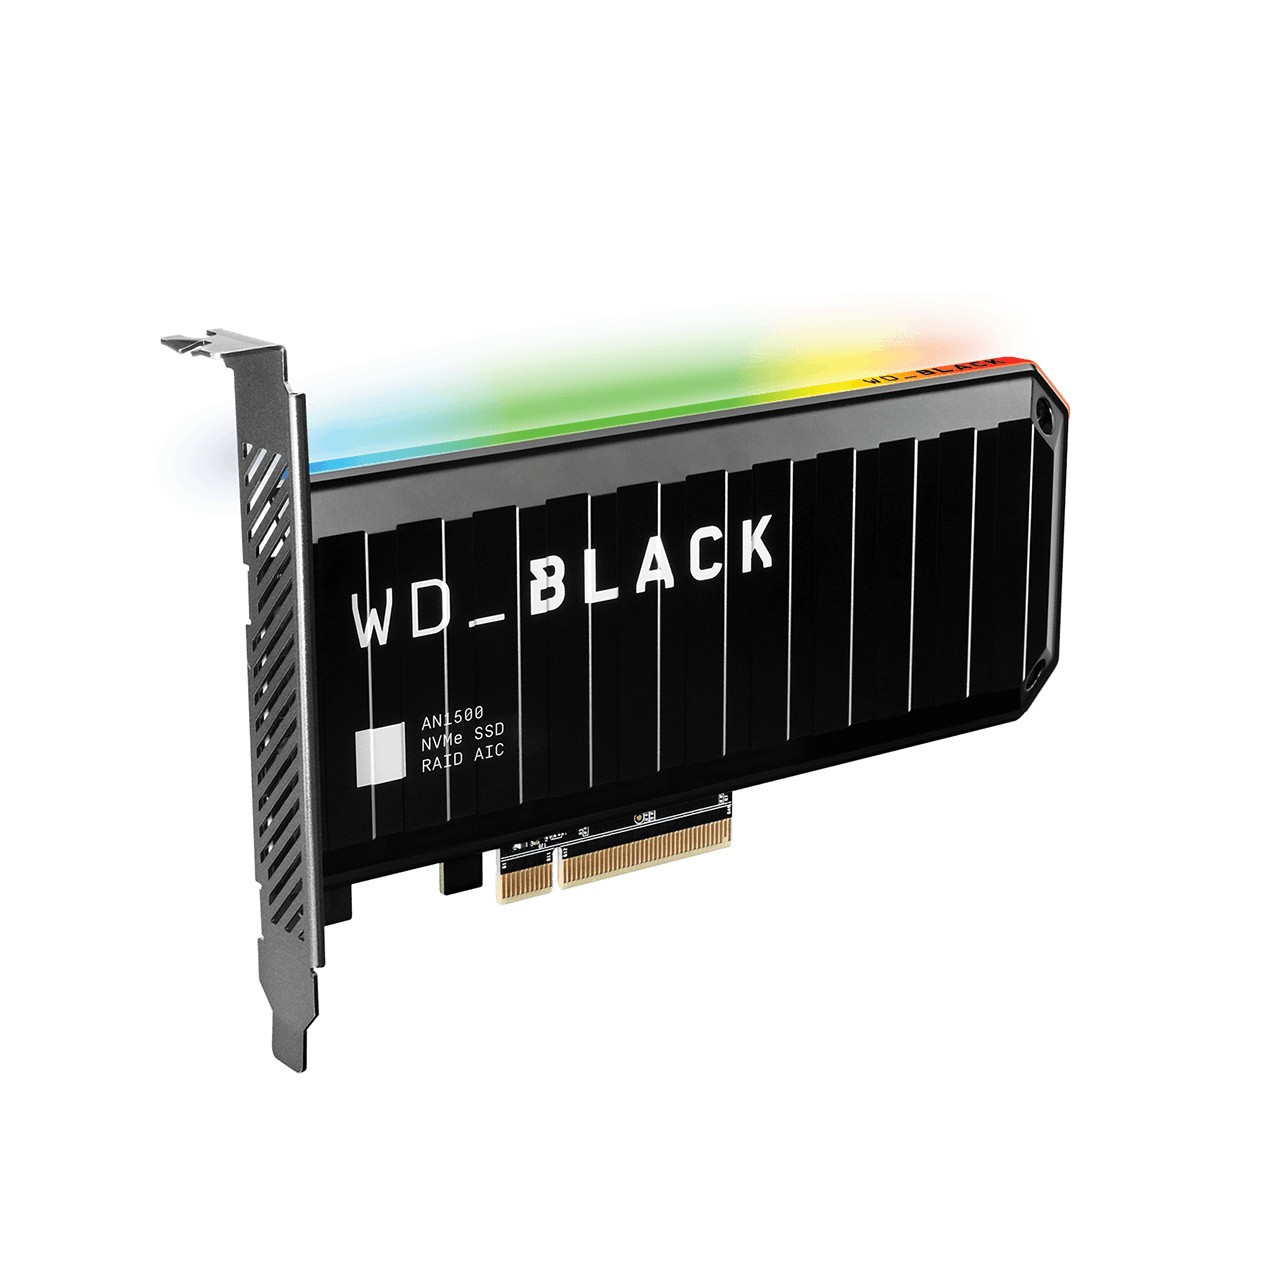 WD 推出高效能 NVMe SSD「SN850」 讀取效能達每秒 7GB 符合 PS5 擴充要求